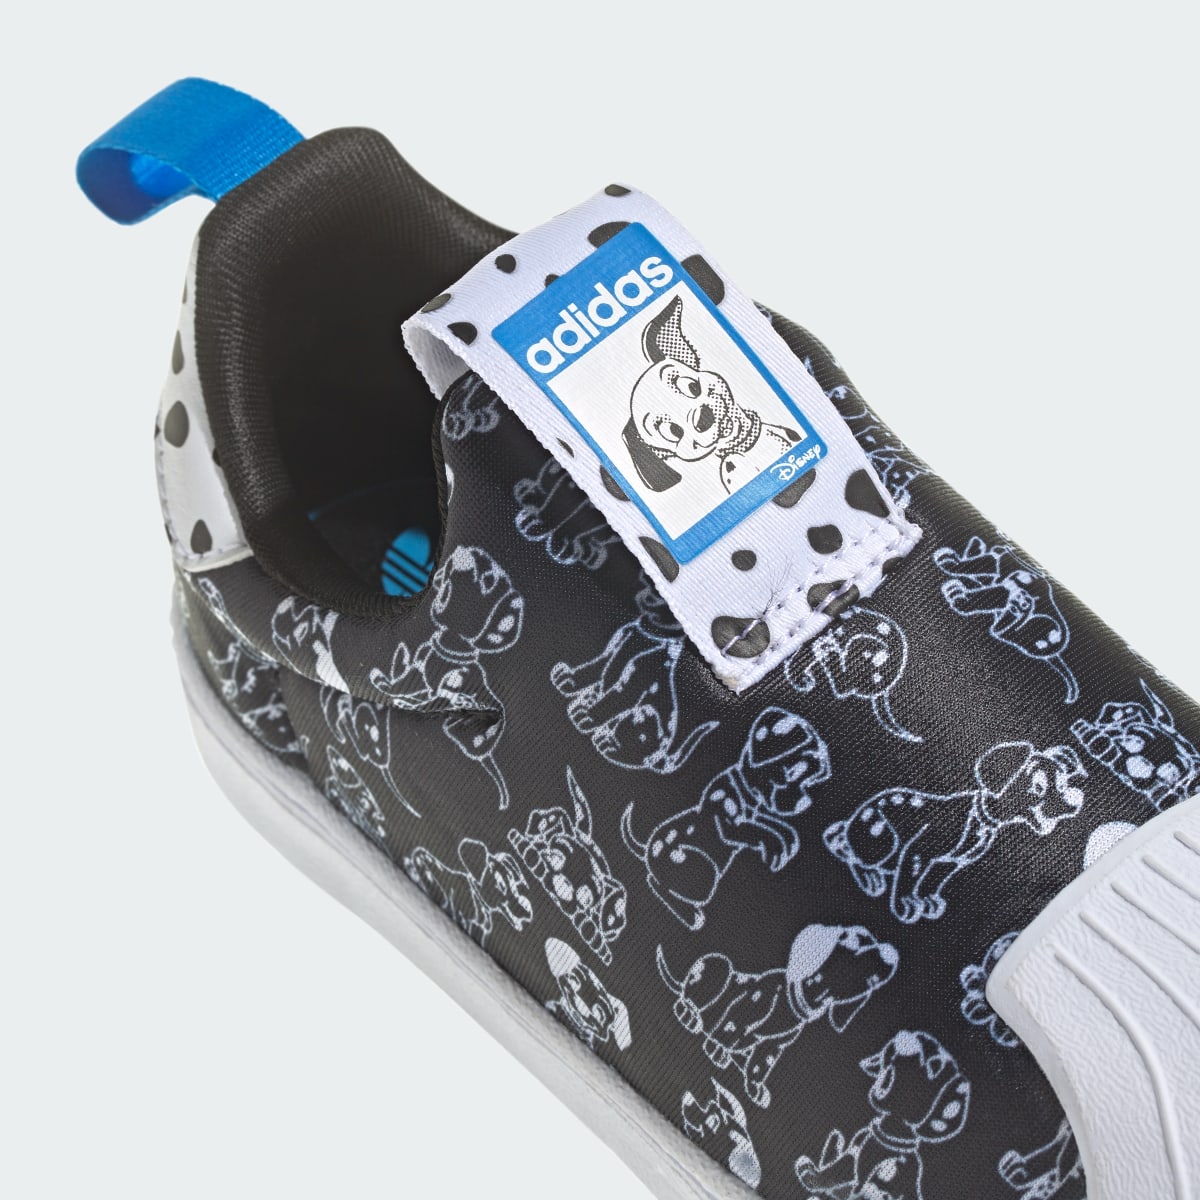 Adidas Scarpe adidas Originals x Disney 101 Dalmatians Superstar 360 Kids. 9